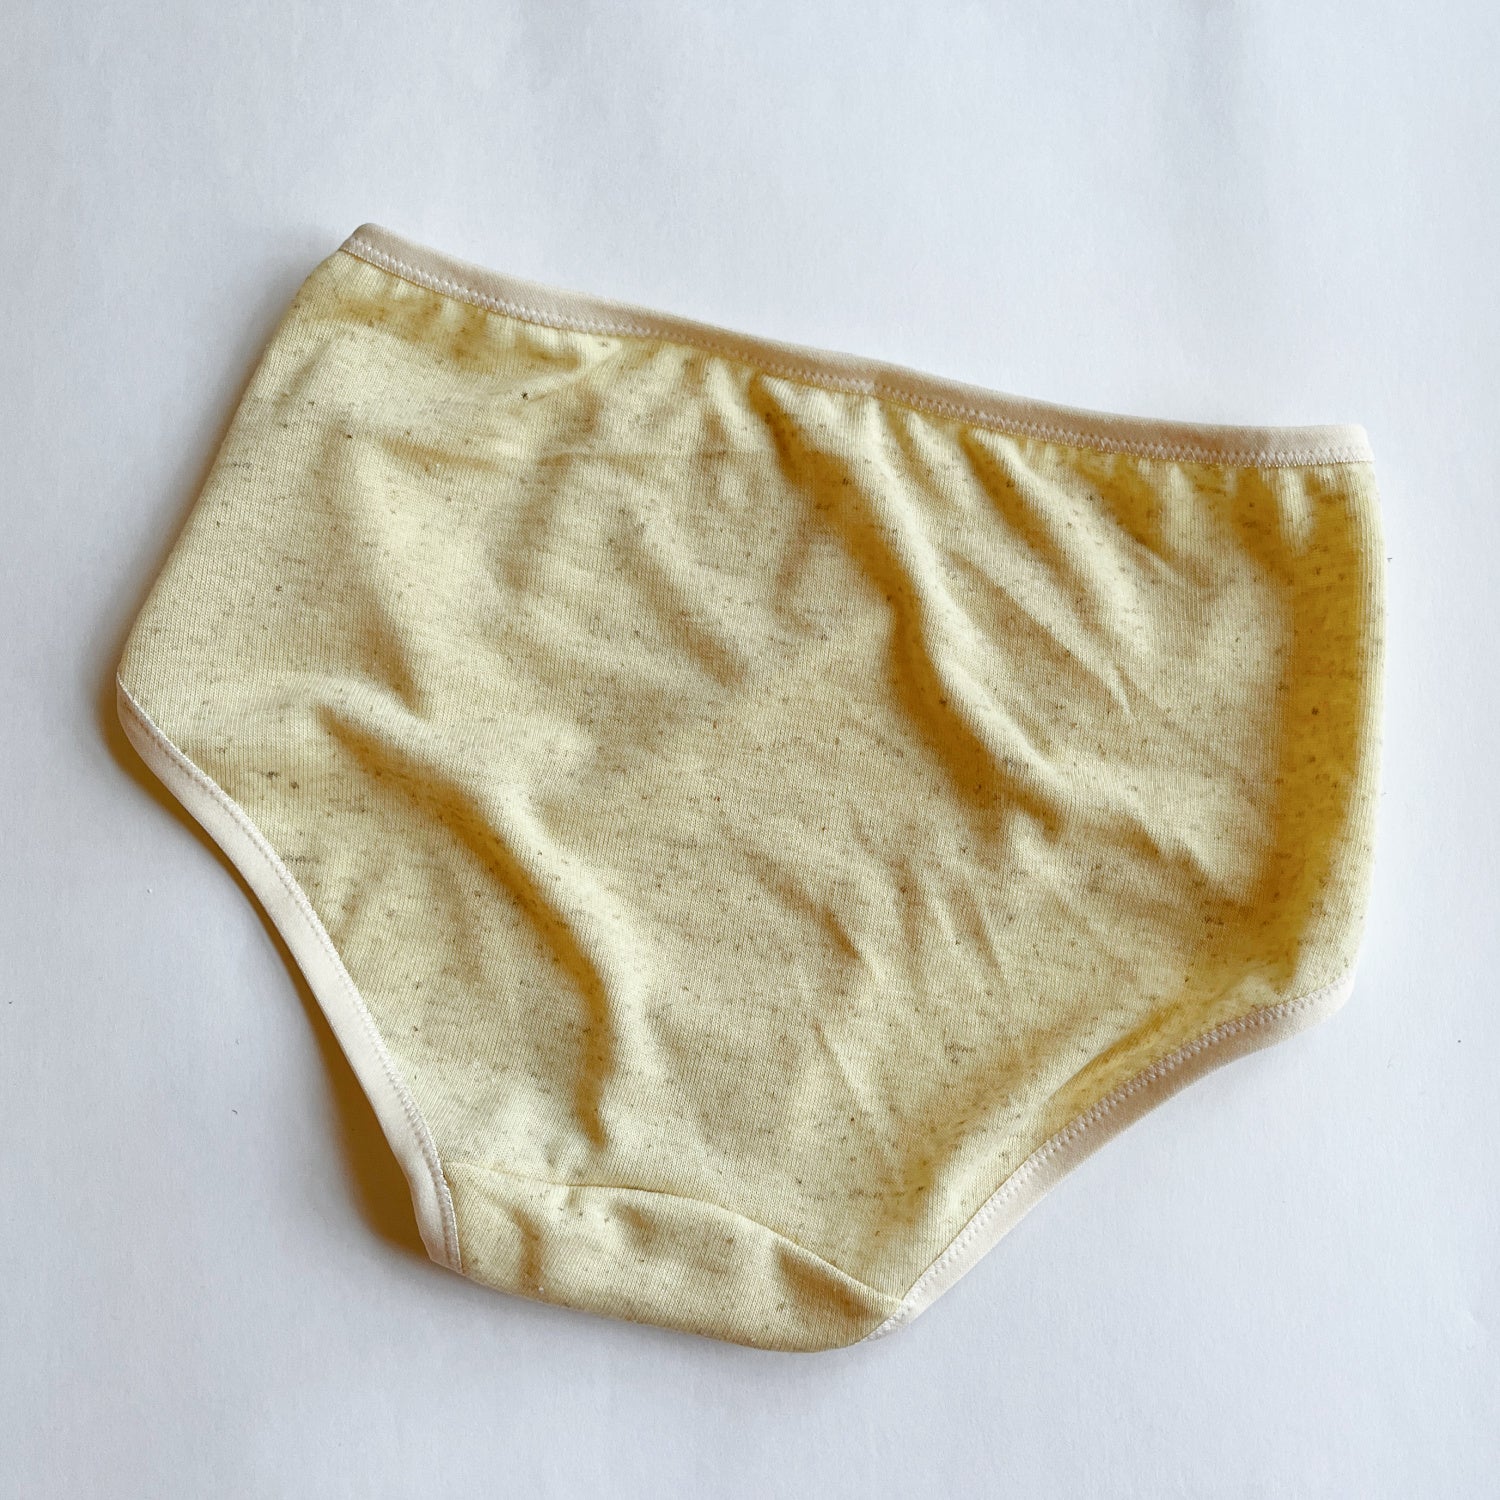 Size SMALL/ Medium Vintage Underwear Ladies Polyester Knickers Made in Era  1980-s -  Australia